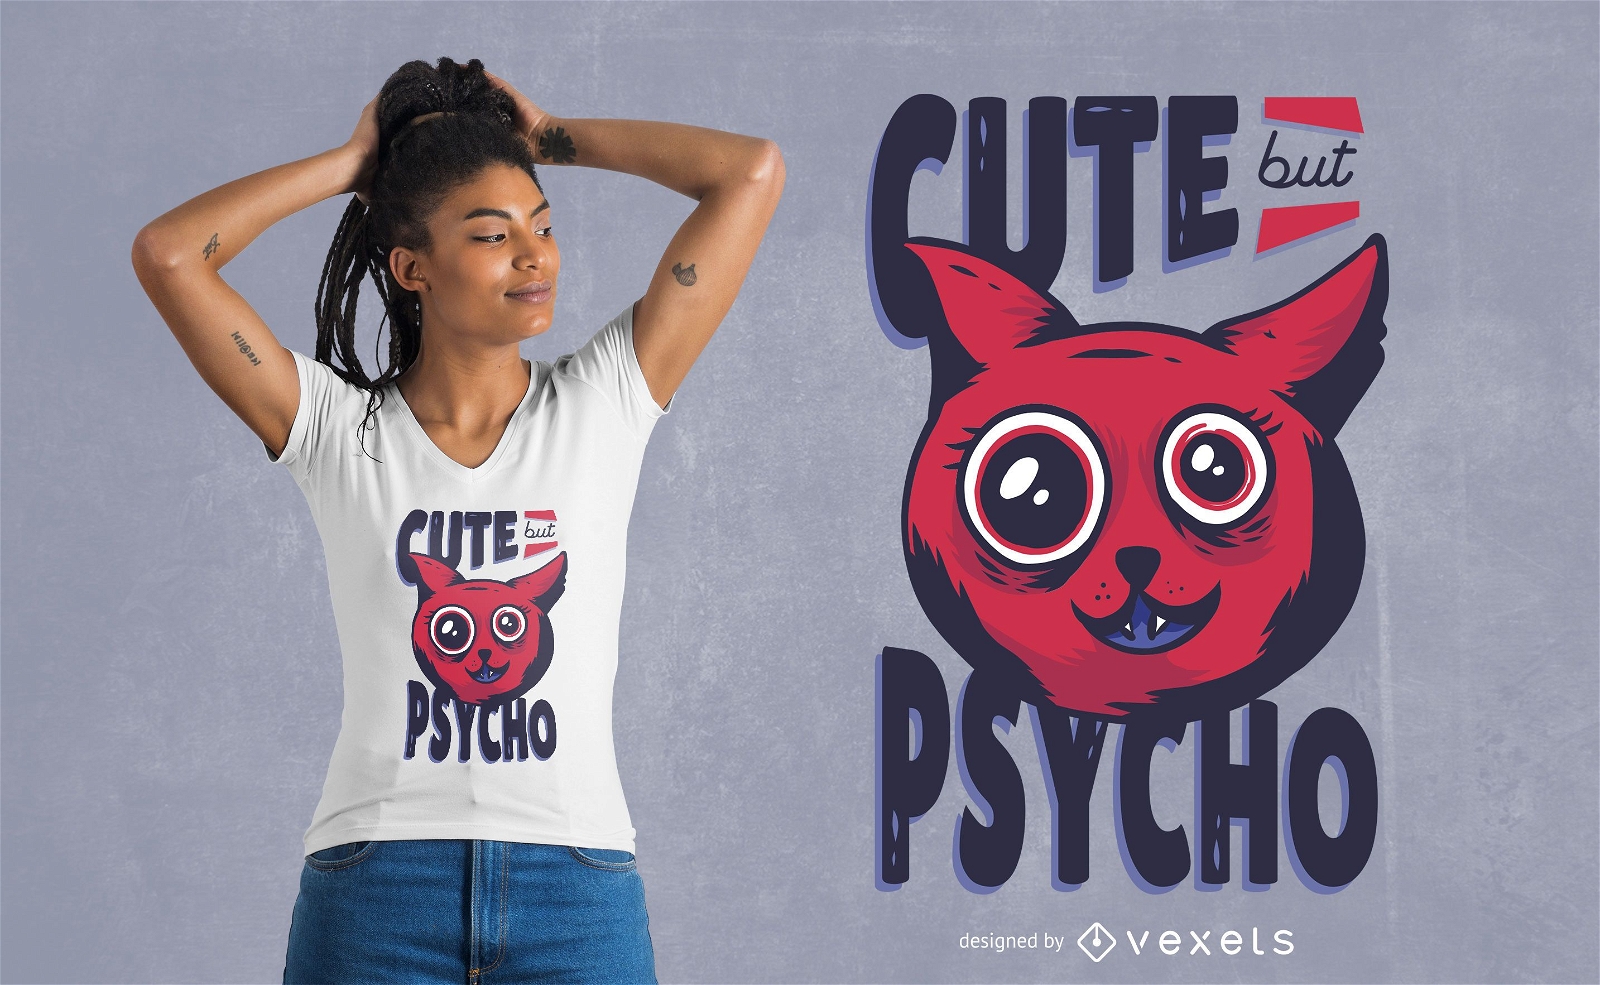 Dise?o de camiseta Cute But Psycho